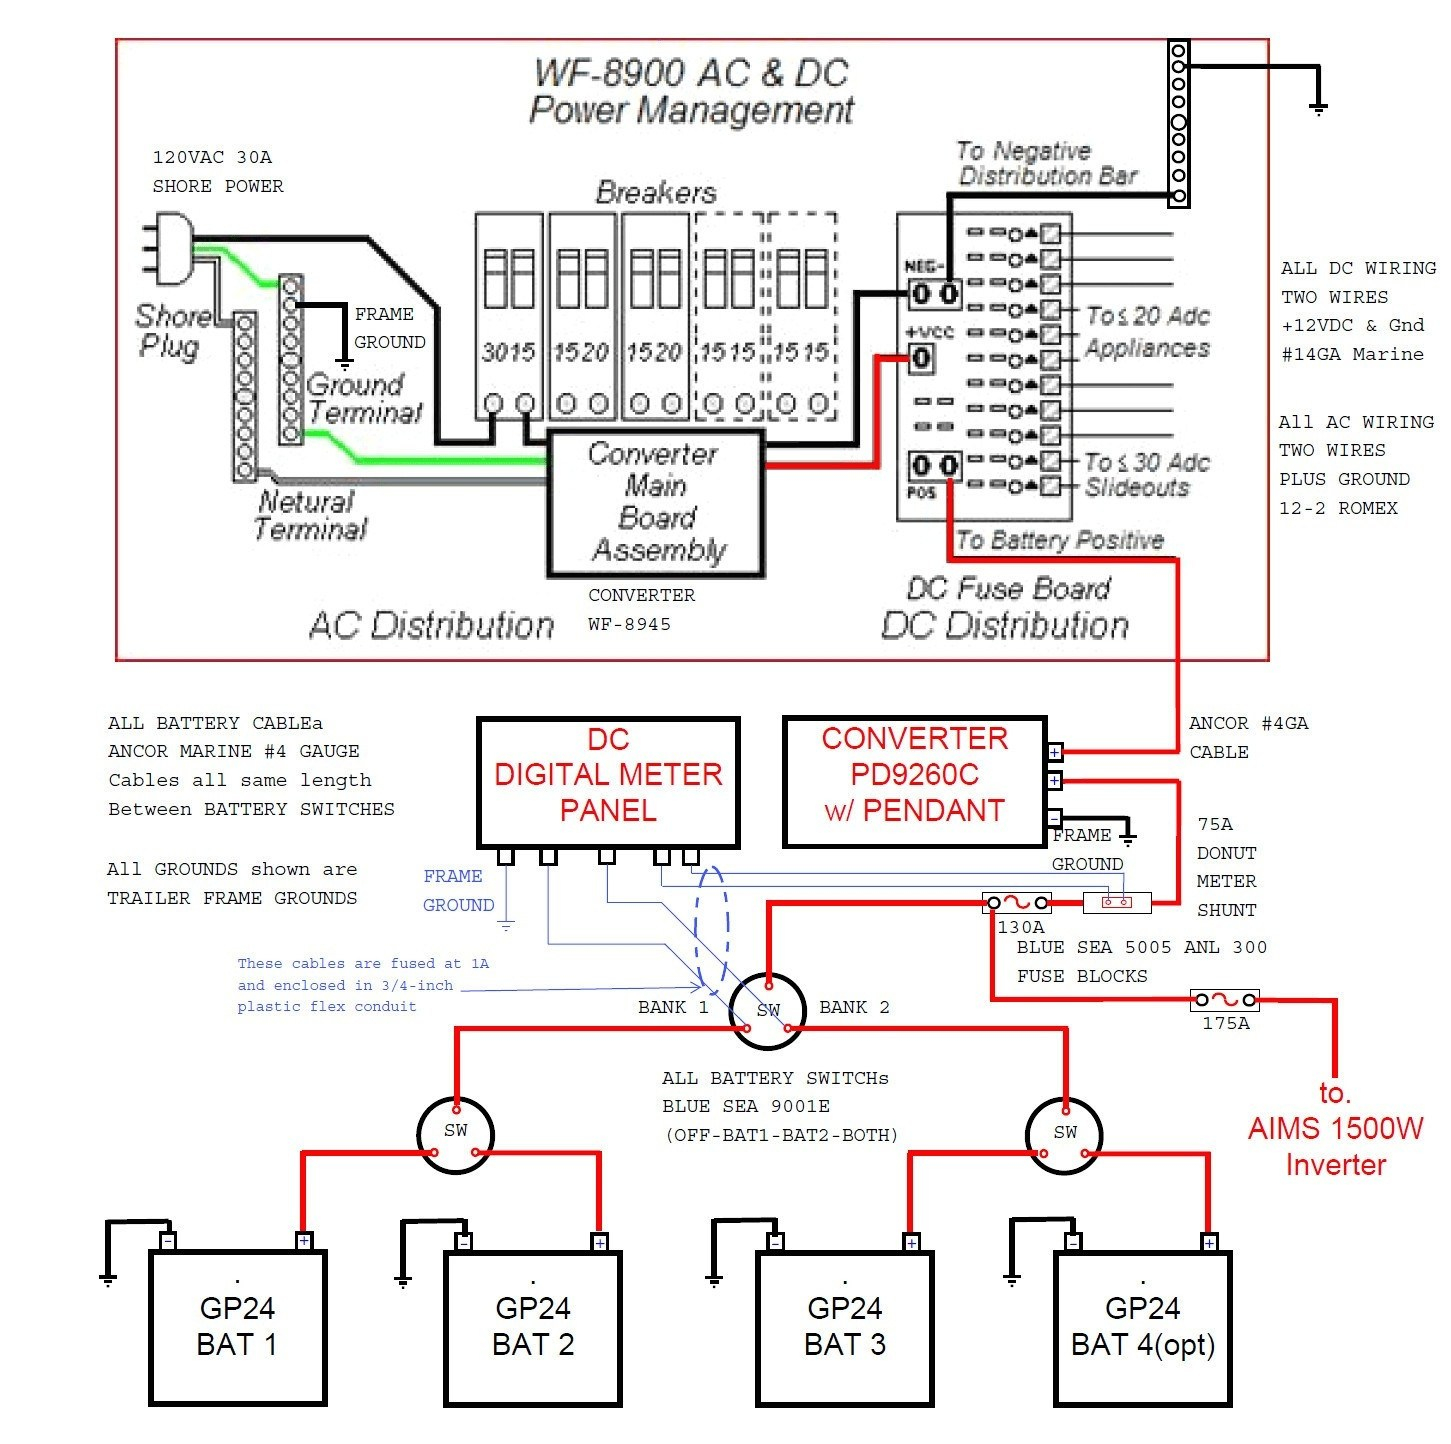 Jayco Battery Wiring Schematic | Wiring Diagram - Travel Trailer Battery Wiring Diagram